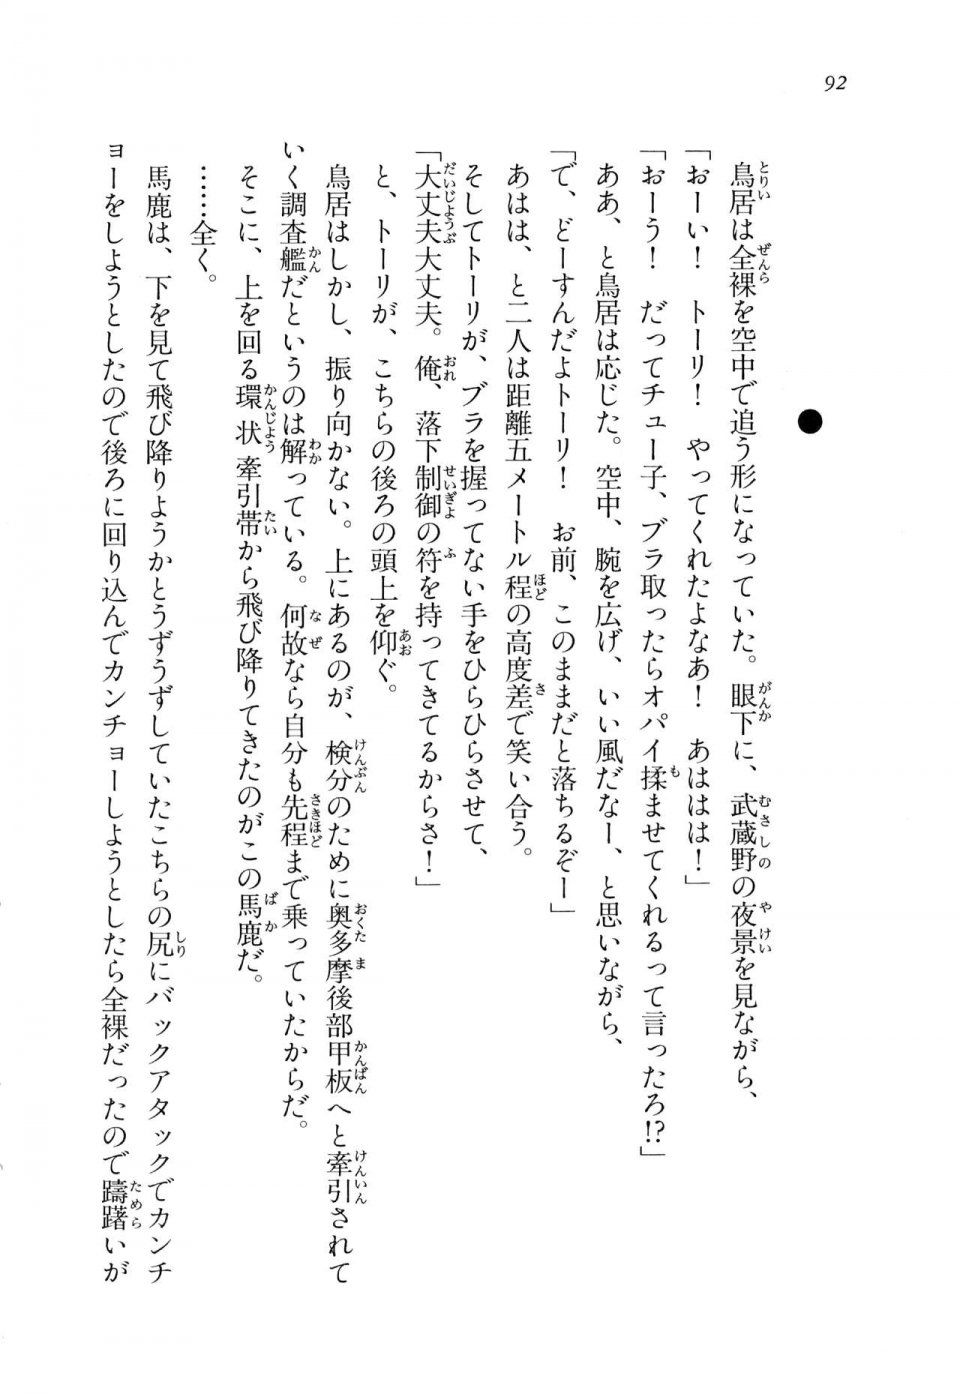 Kyoukai Senjou no Horizon BD Special Mininovel Vol 4(2B) - Photo #96